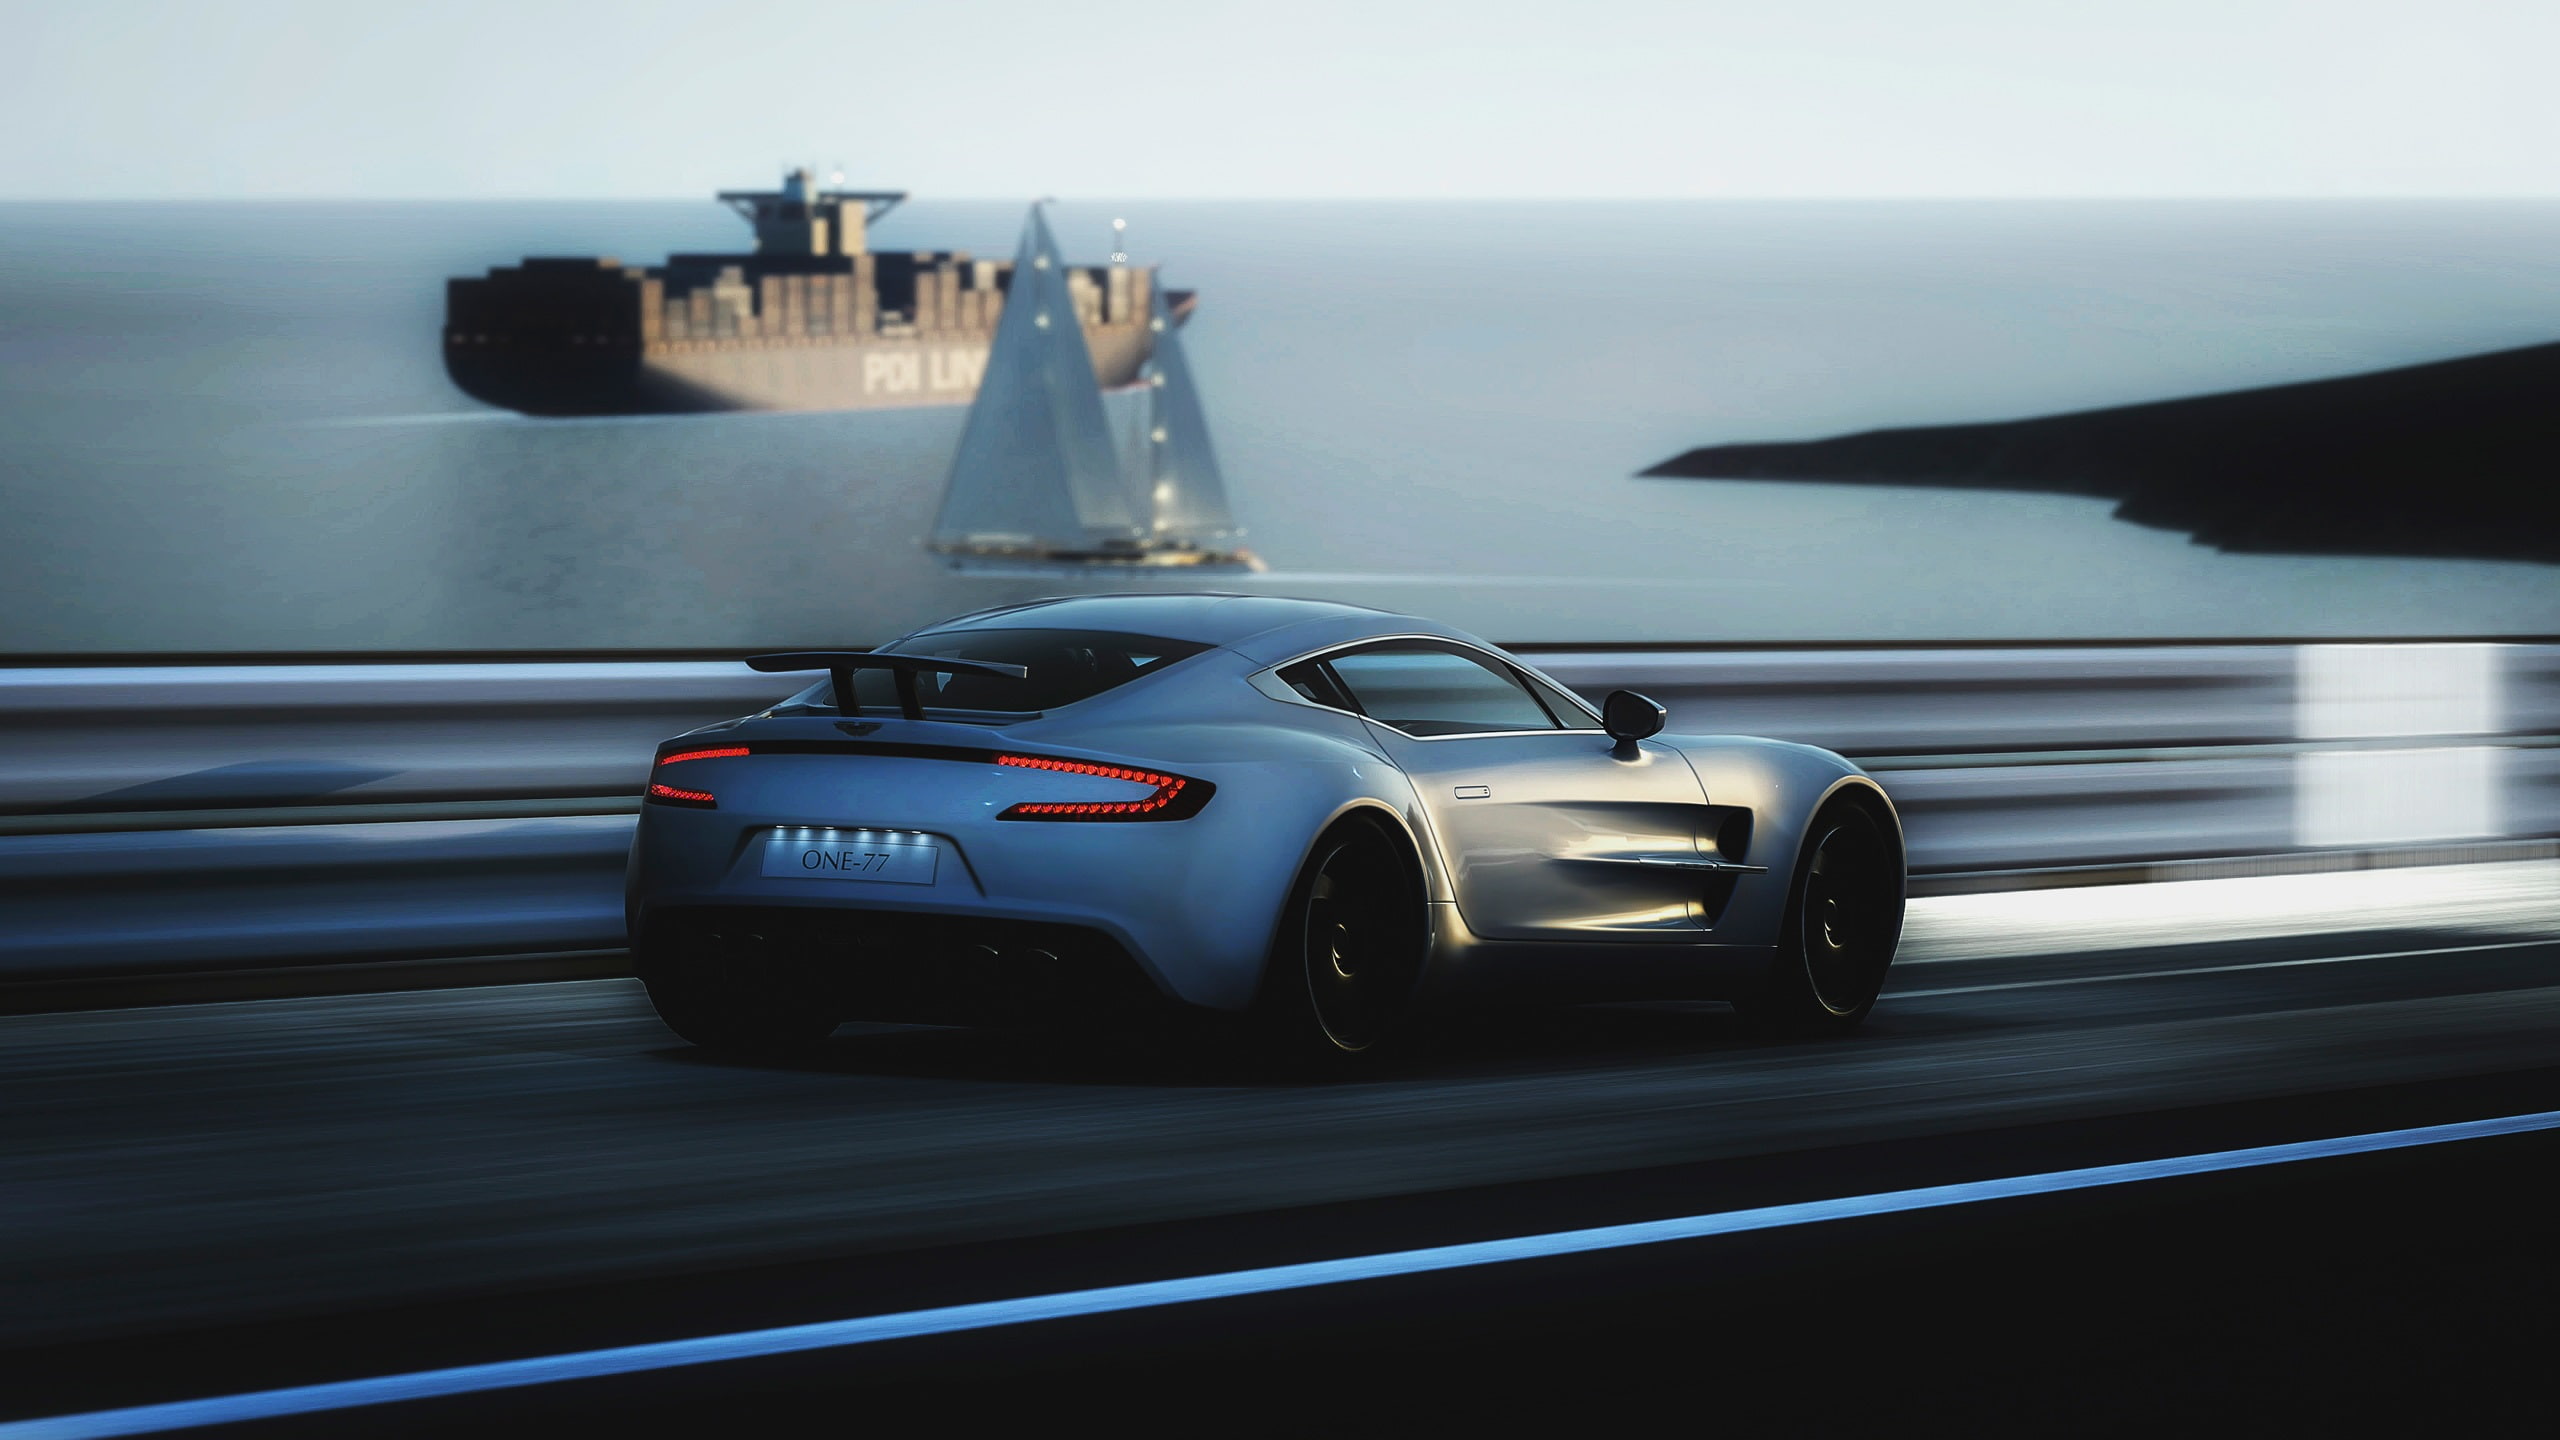 Aston Martin ONE-77 supercar speed, grey sports car